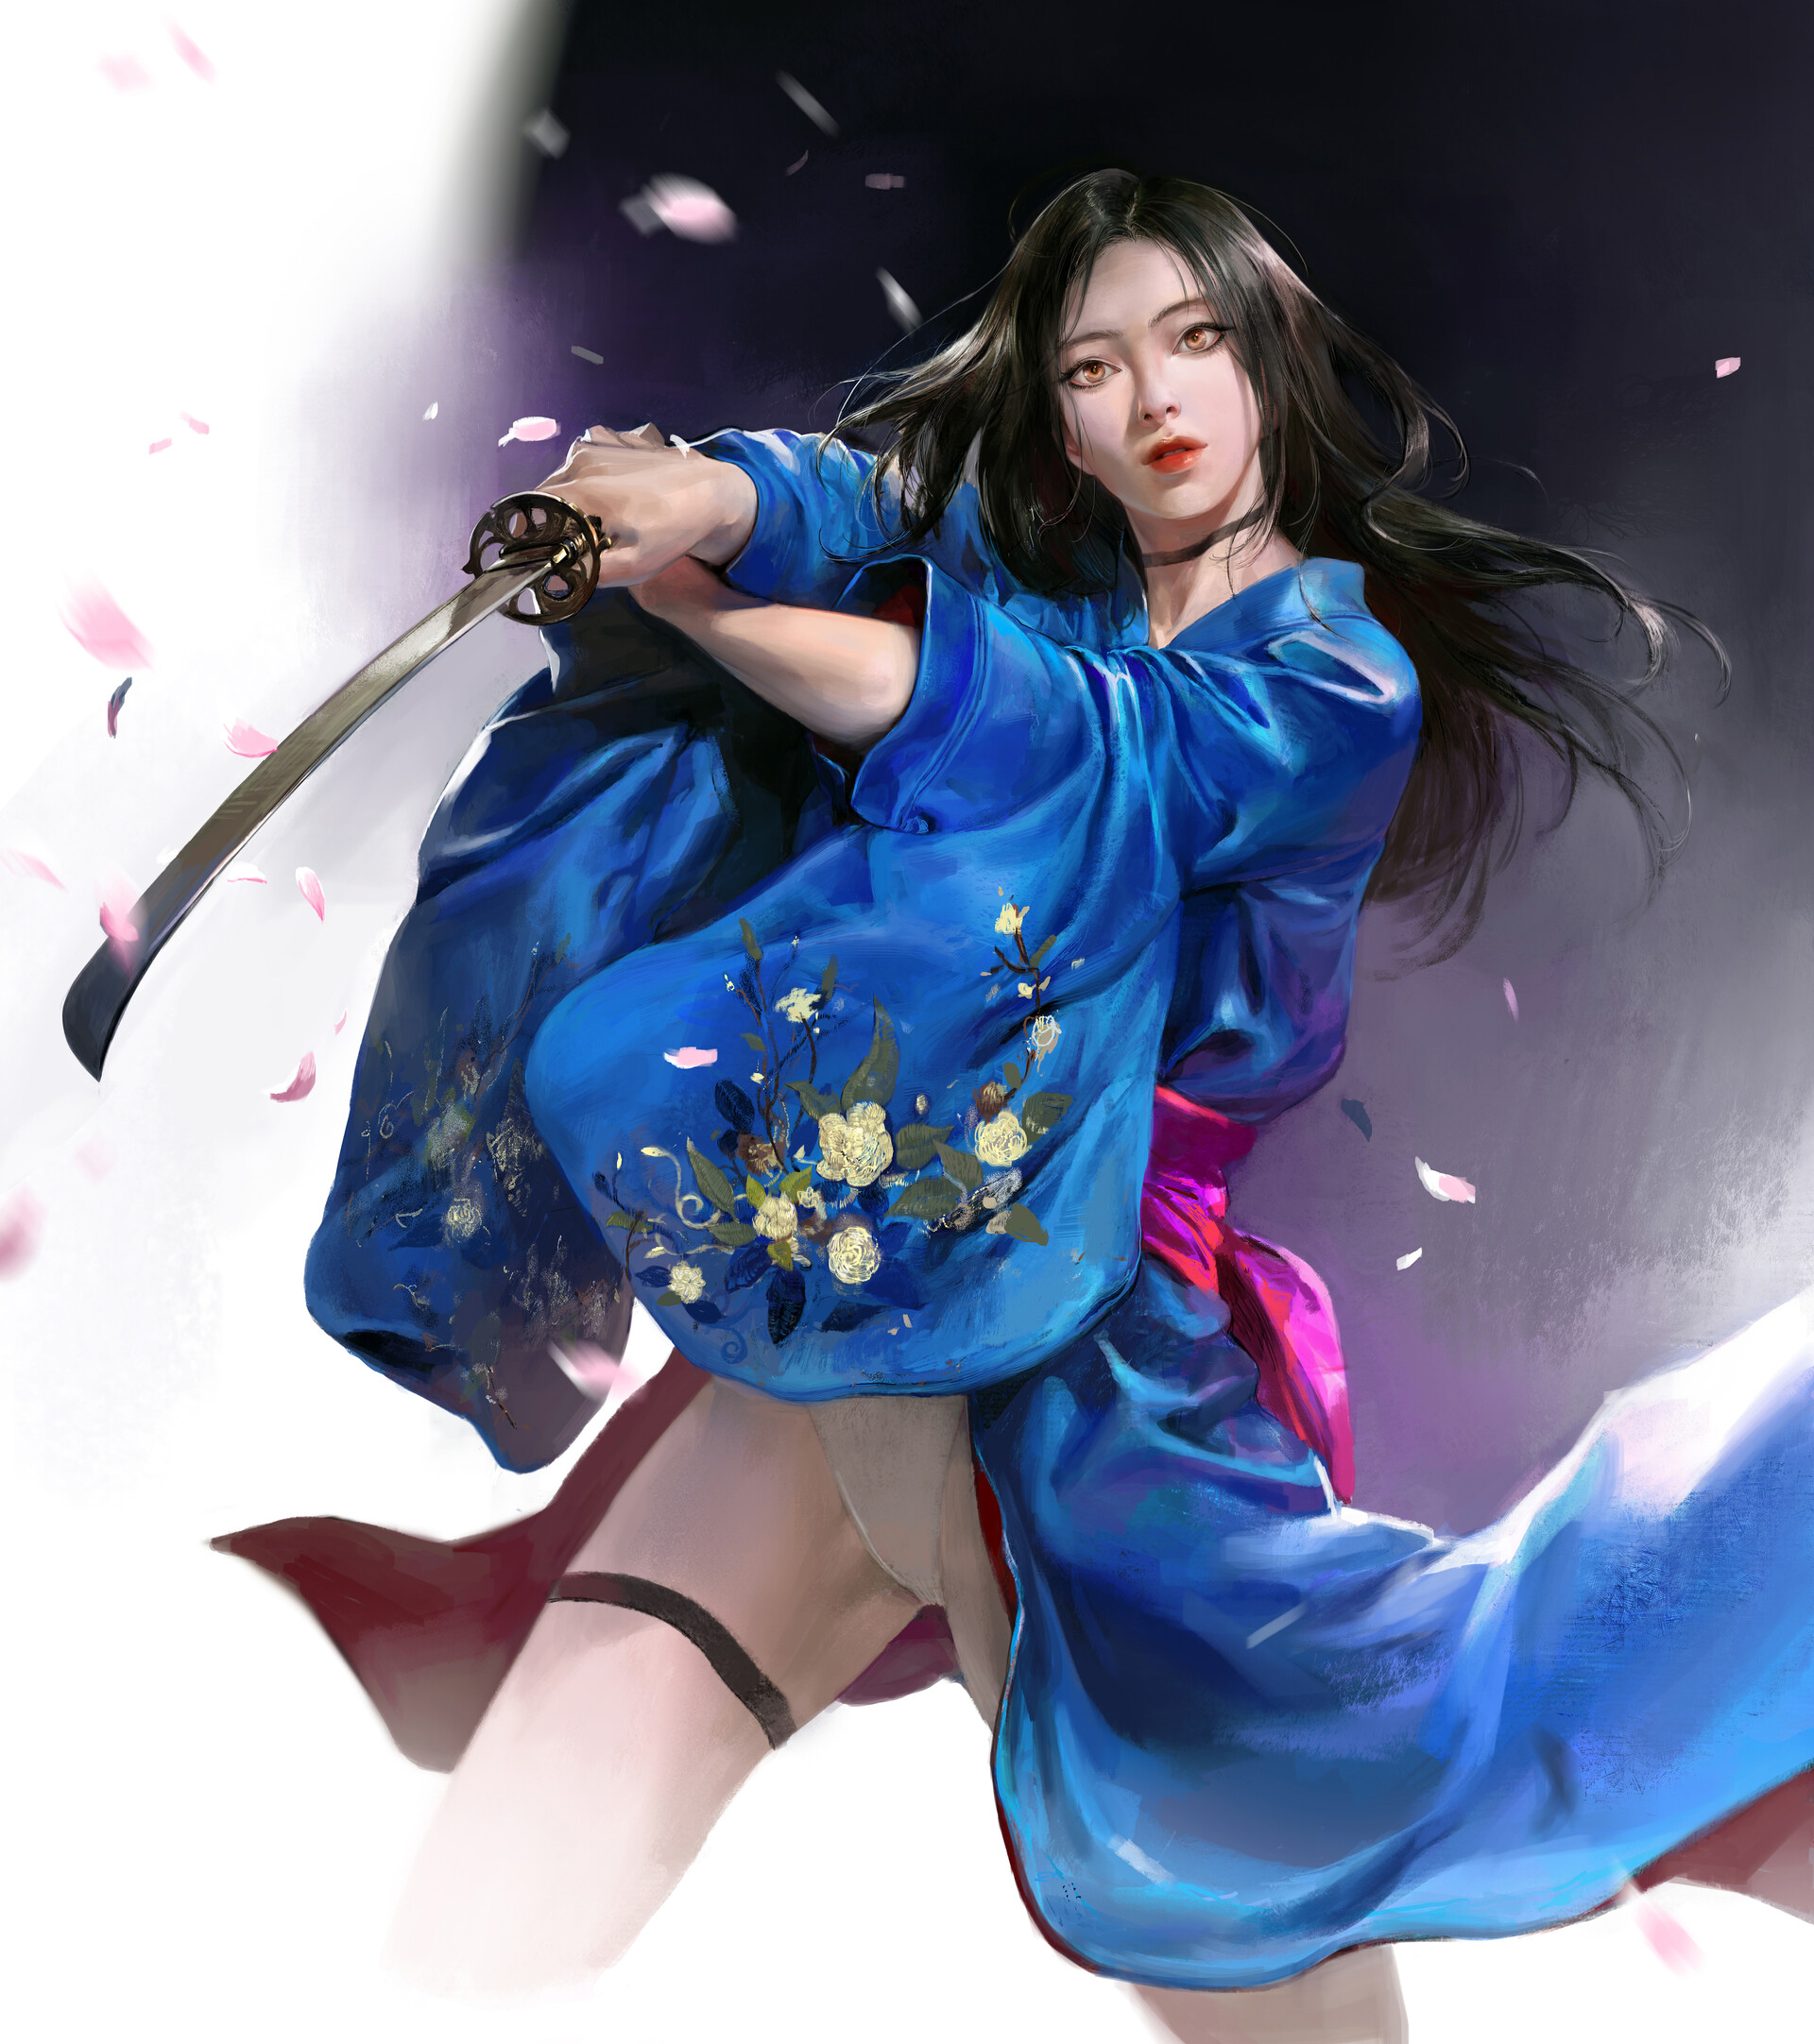 General 1920x2164 Taak Choi drawing women dark hair Asian brown eyes weapon katana dress blue clothing panties cherry blossom petals fighting sword